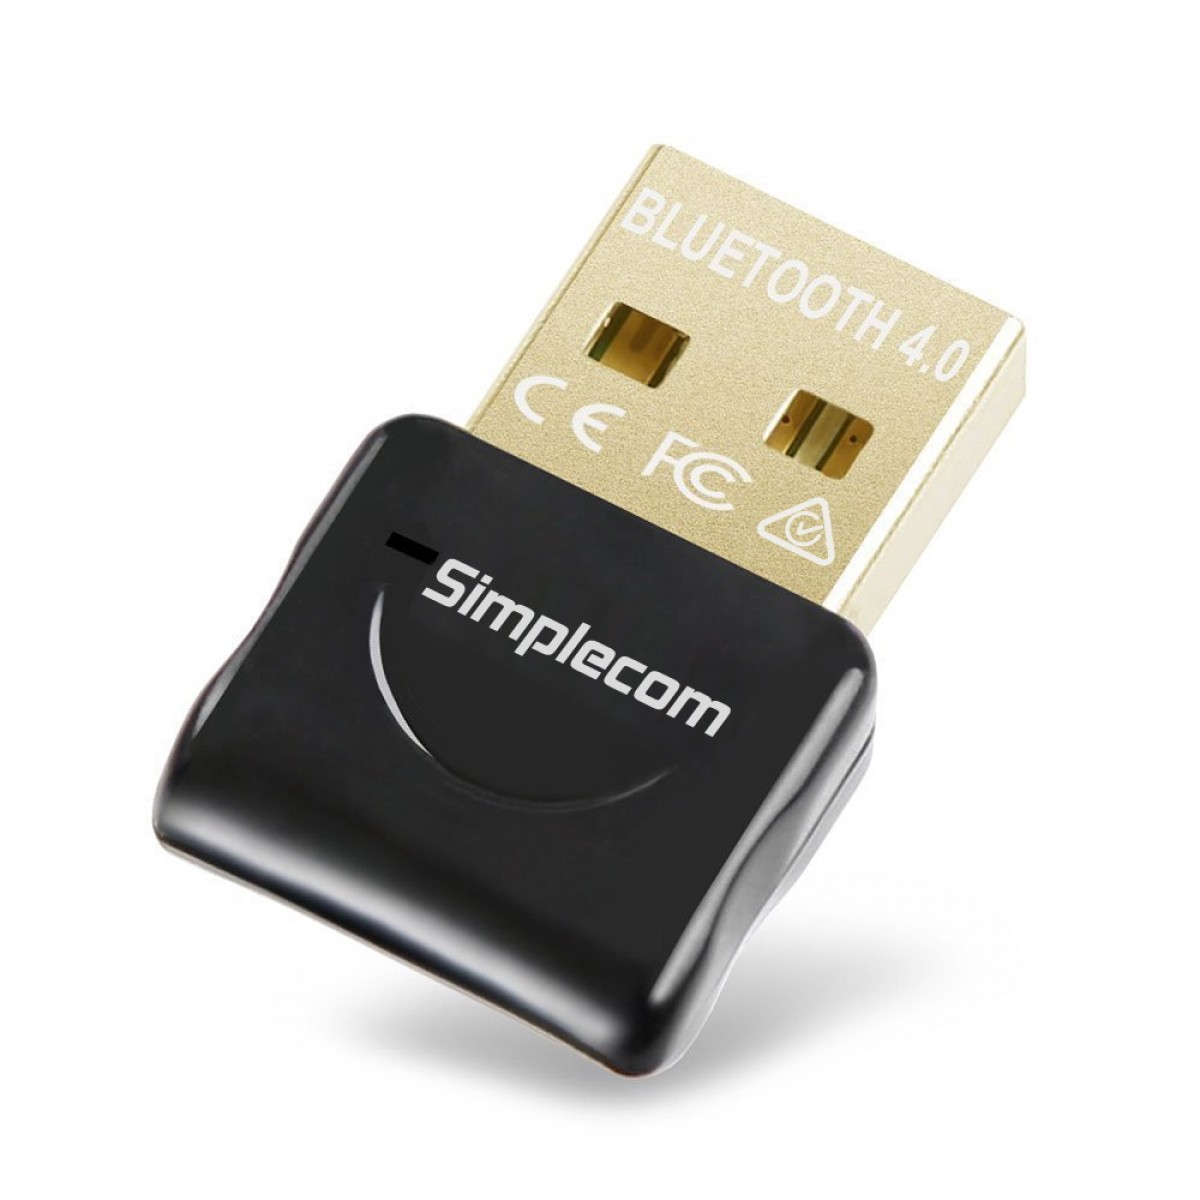 Dongle USB Bluetooth, 4.0, Bluetooth / USB